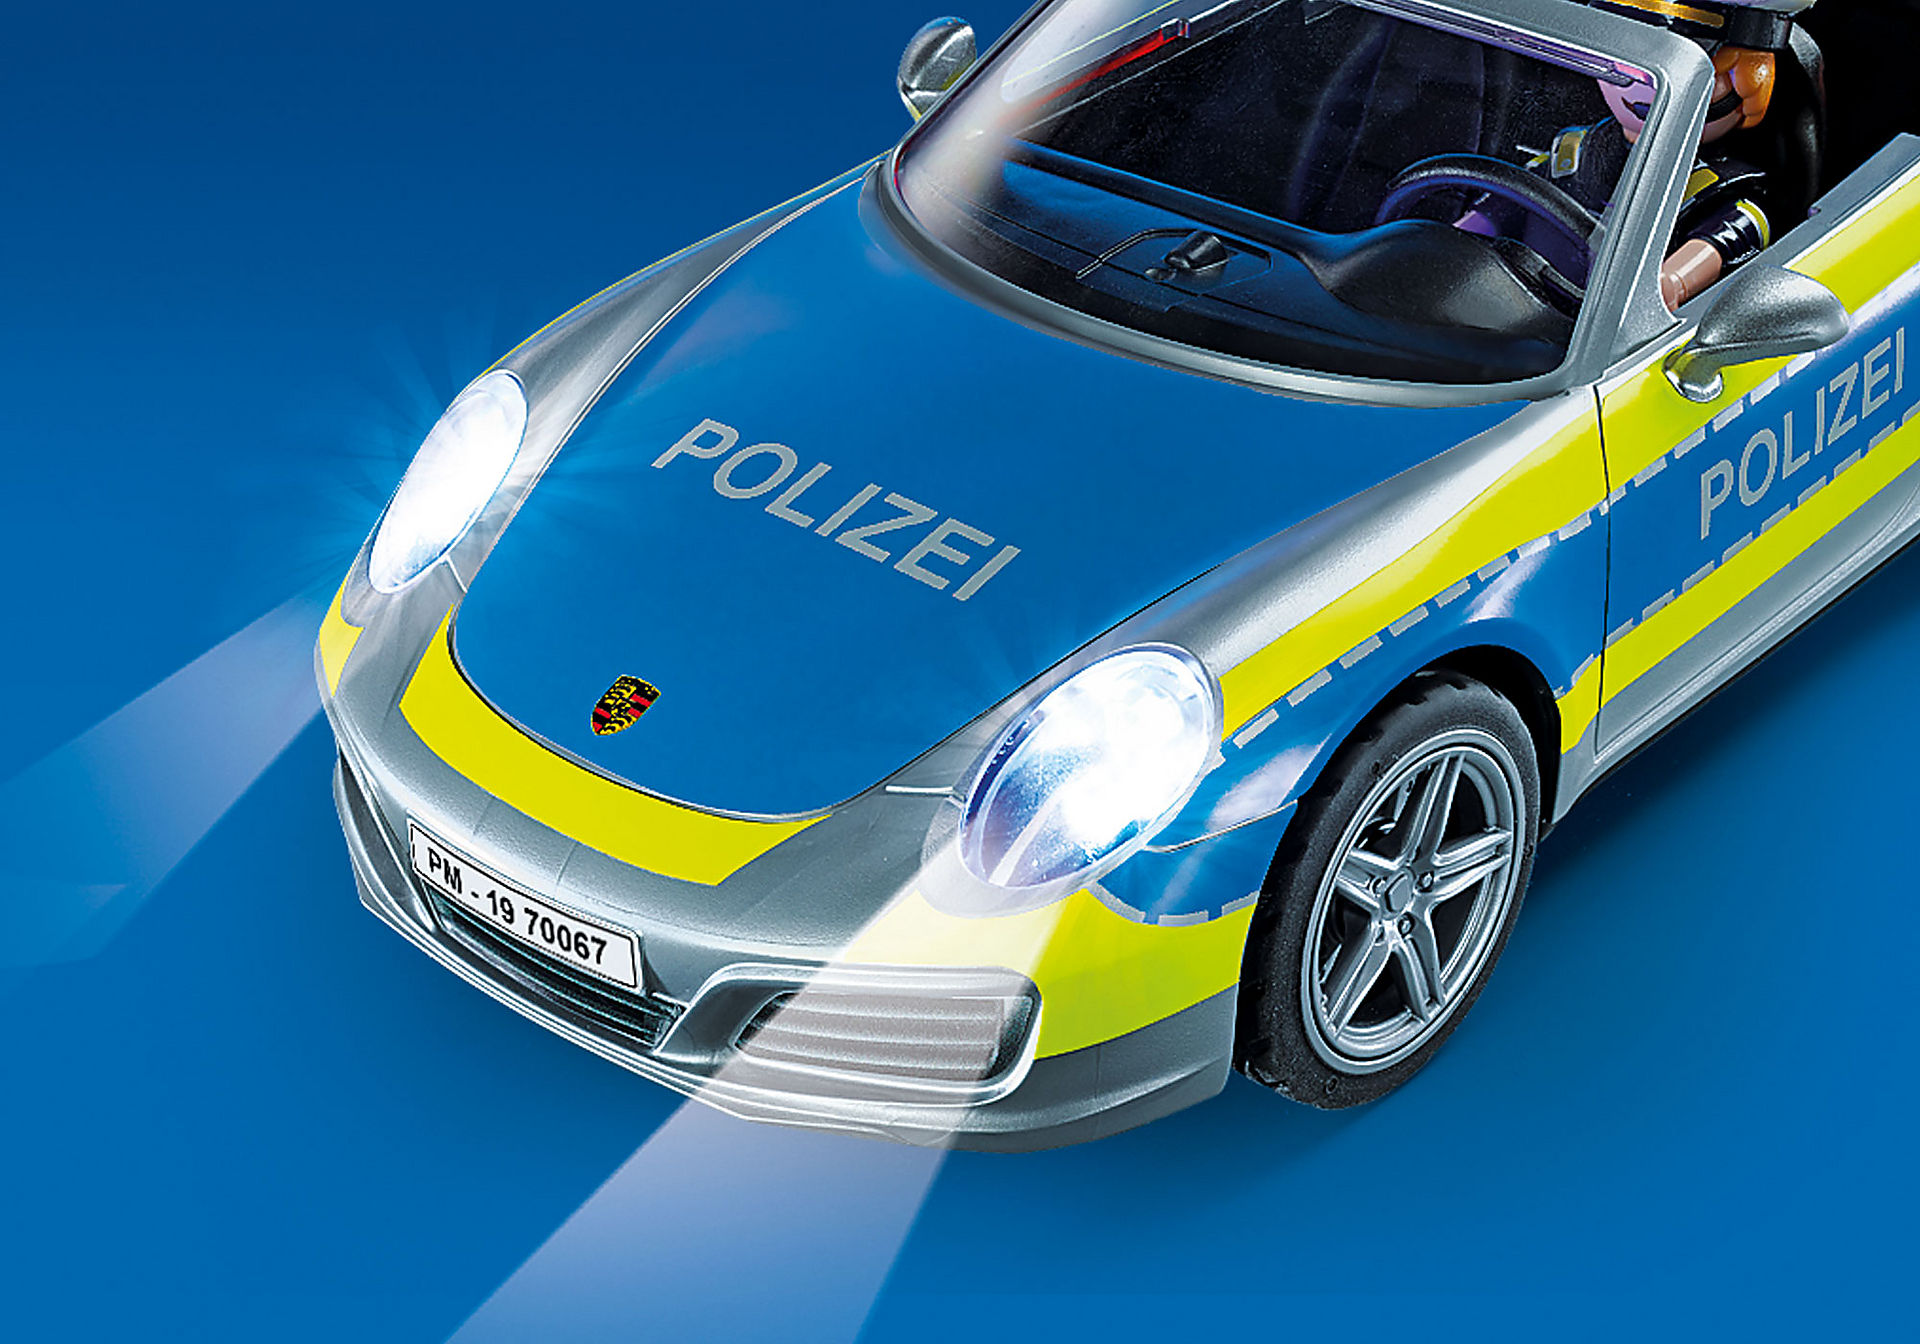 70067 Porsche 911 Carrera 4S Police zoom image5